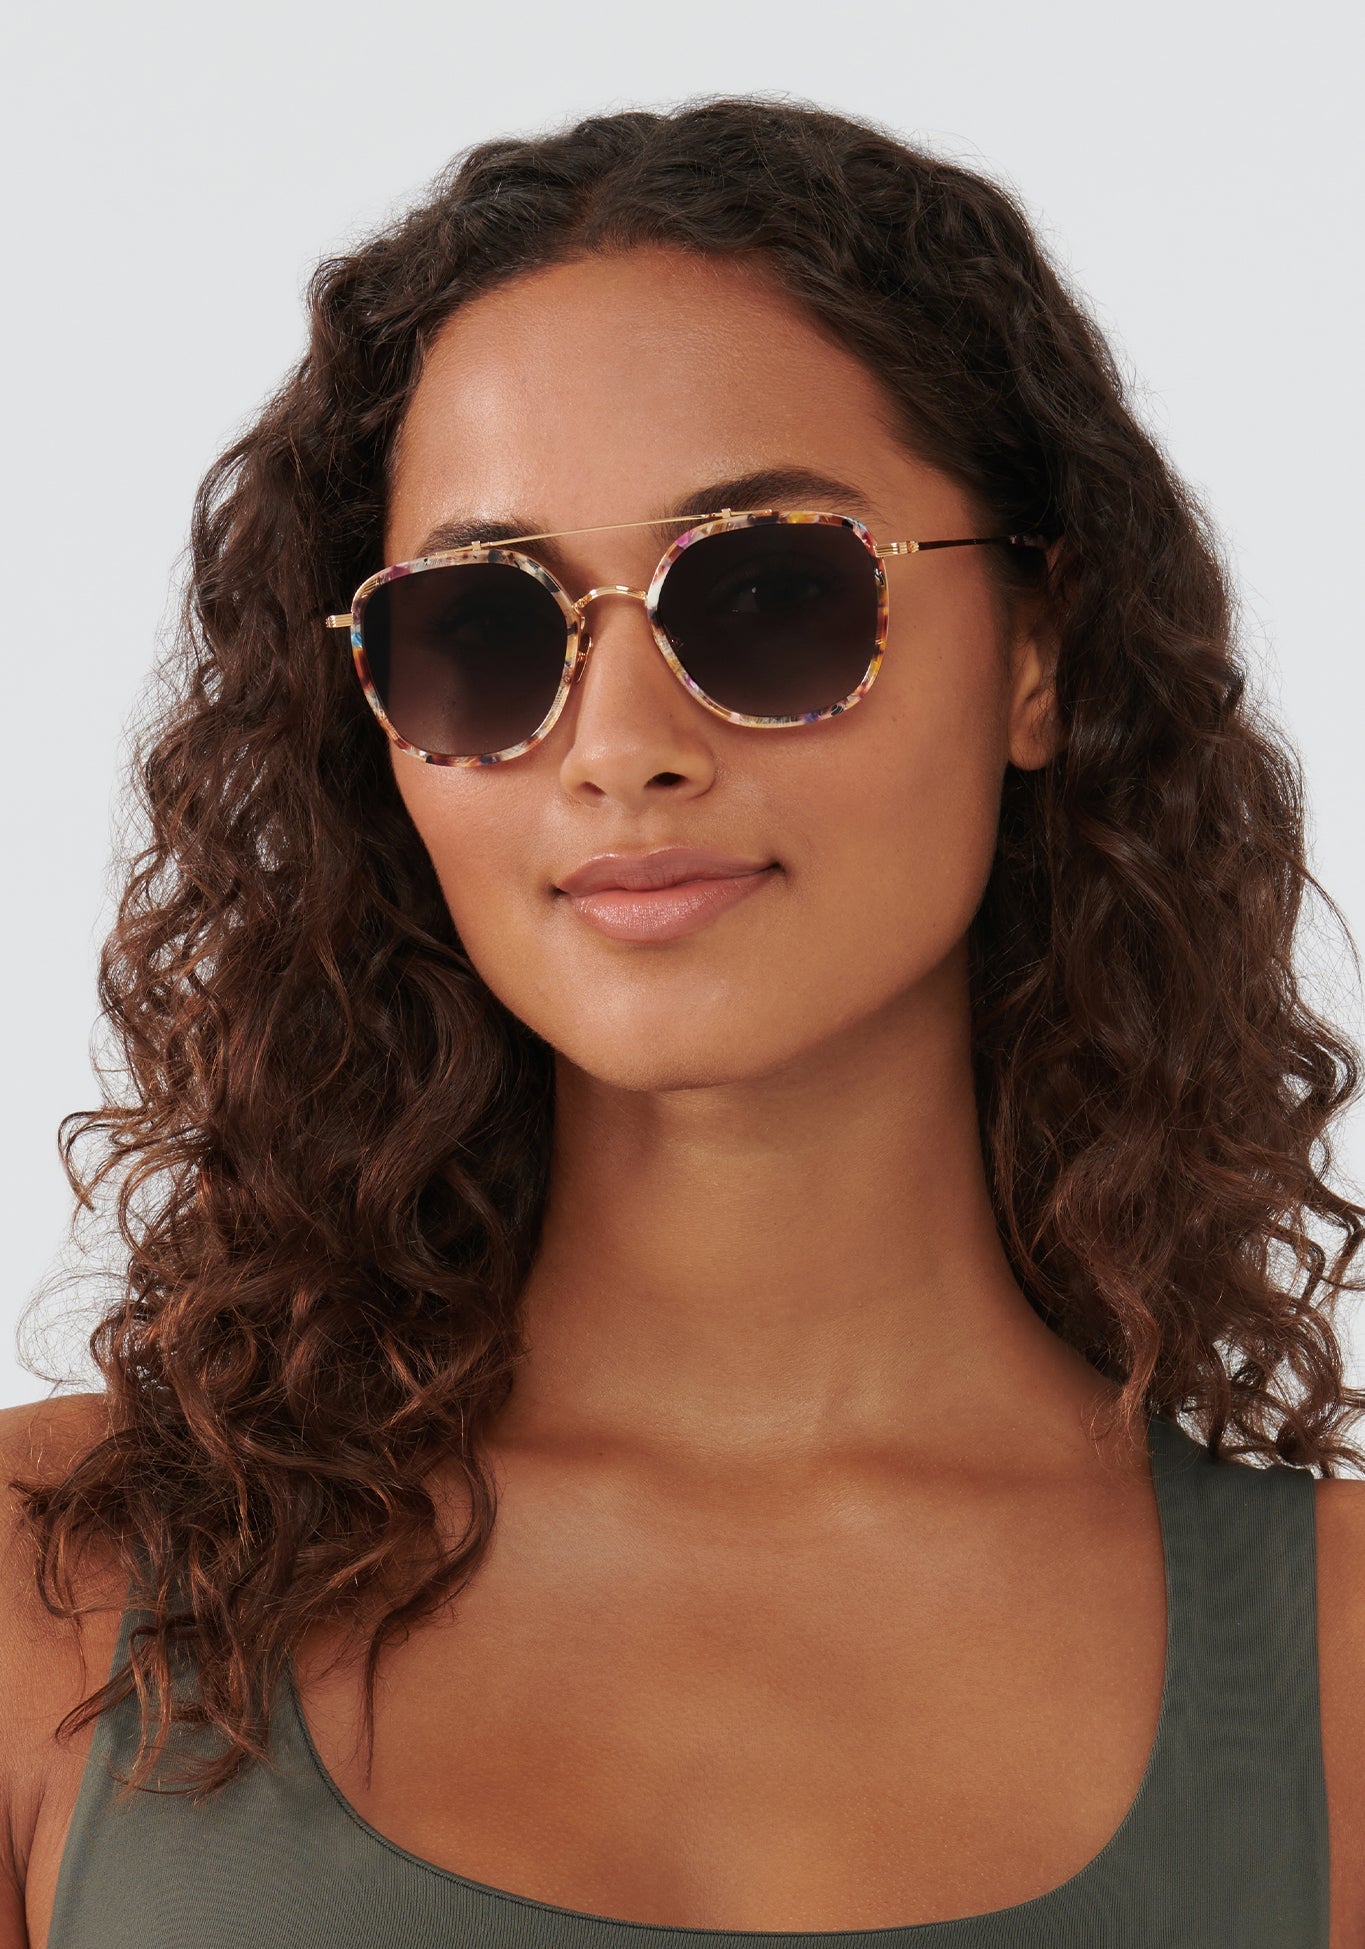 AUSTIN | Capri 24K Titanium Handcrafted, Luxury multicolored acetate KREWE sunglasses womens model | Model: Meli